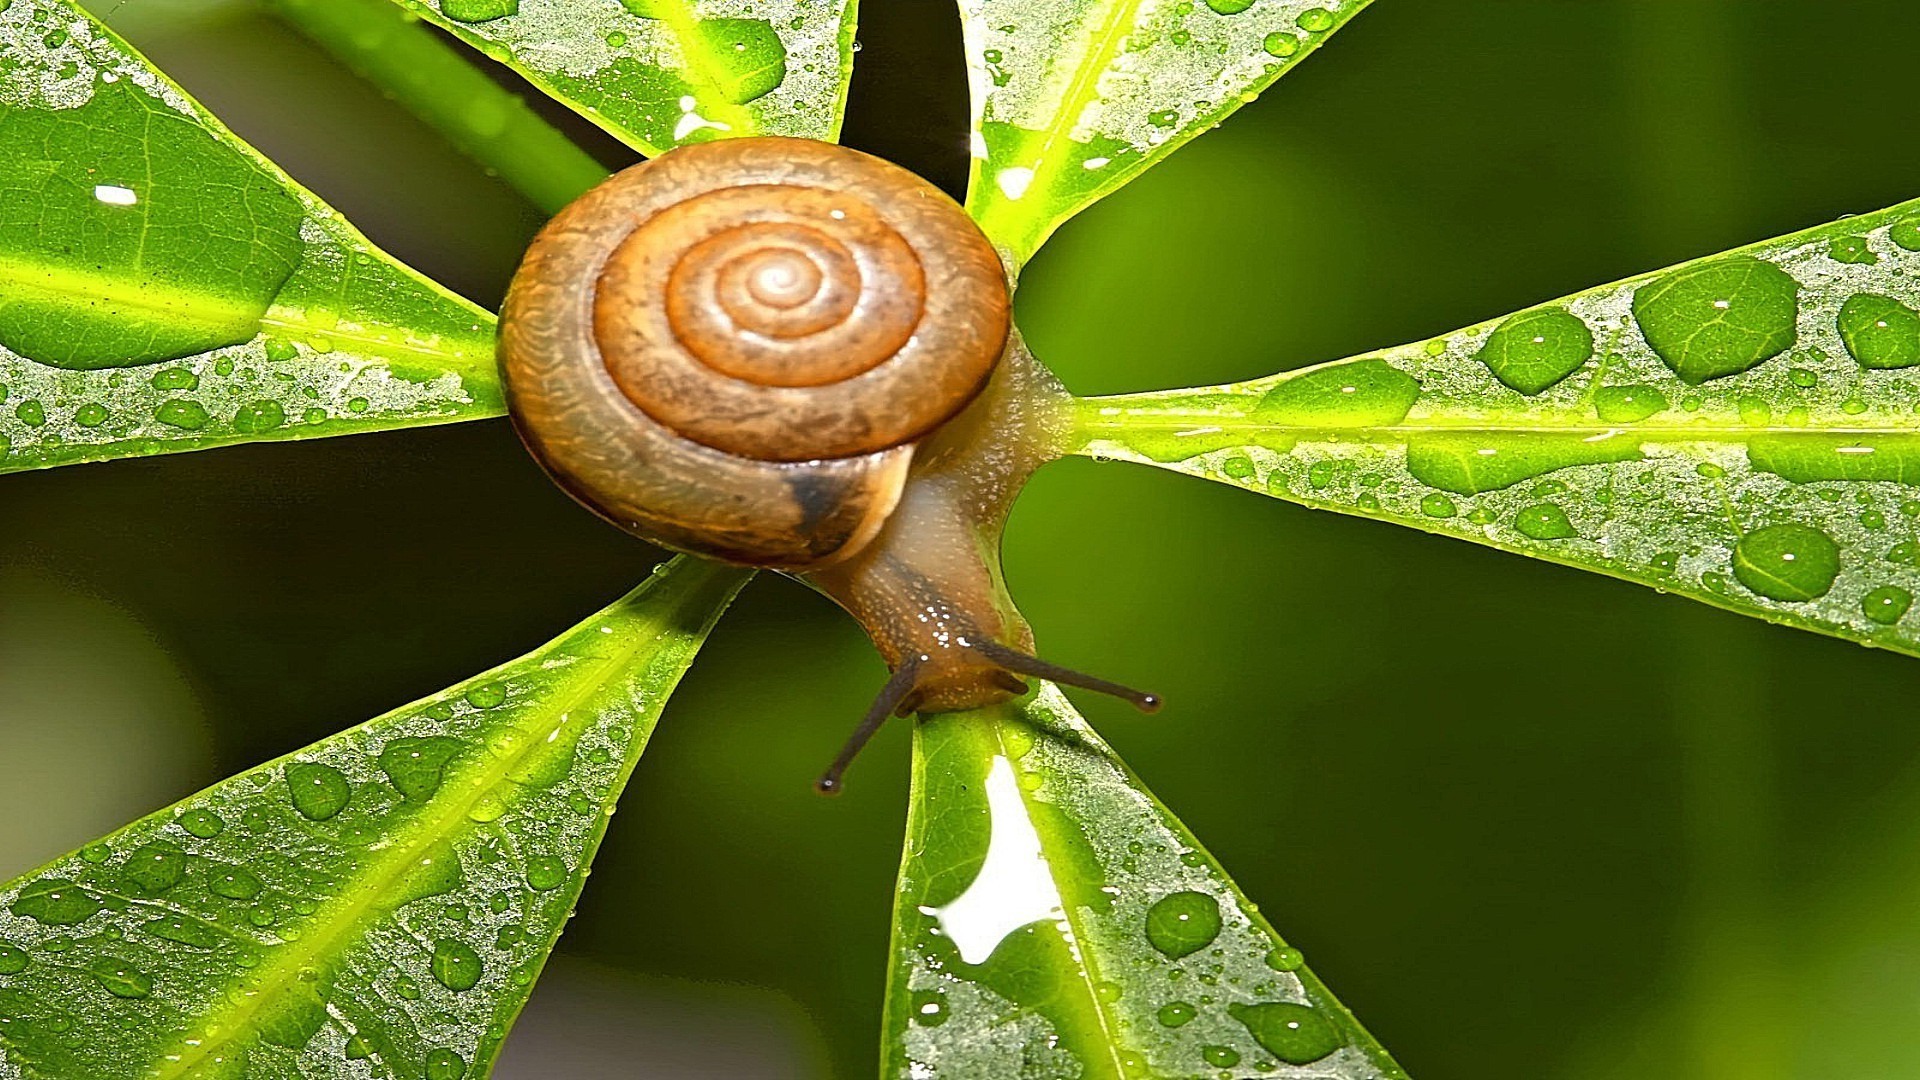 insects snail garden slimy slow gastropod nature leaf helix wet shellfish slug flora invertebrate slime dew rain spiral insect shell